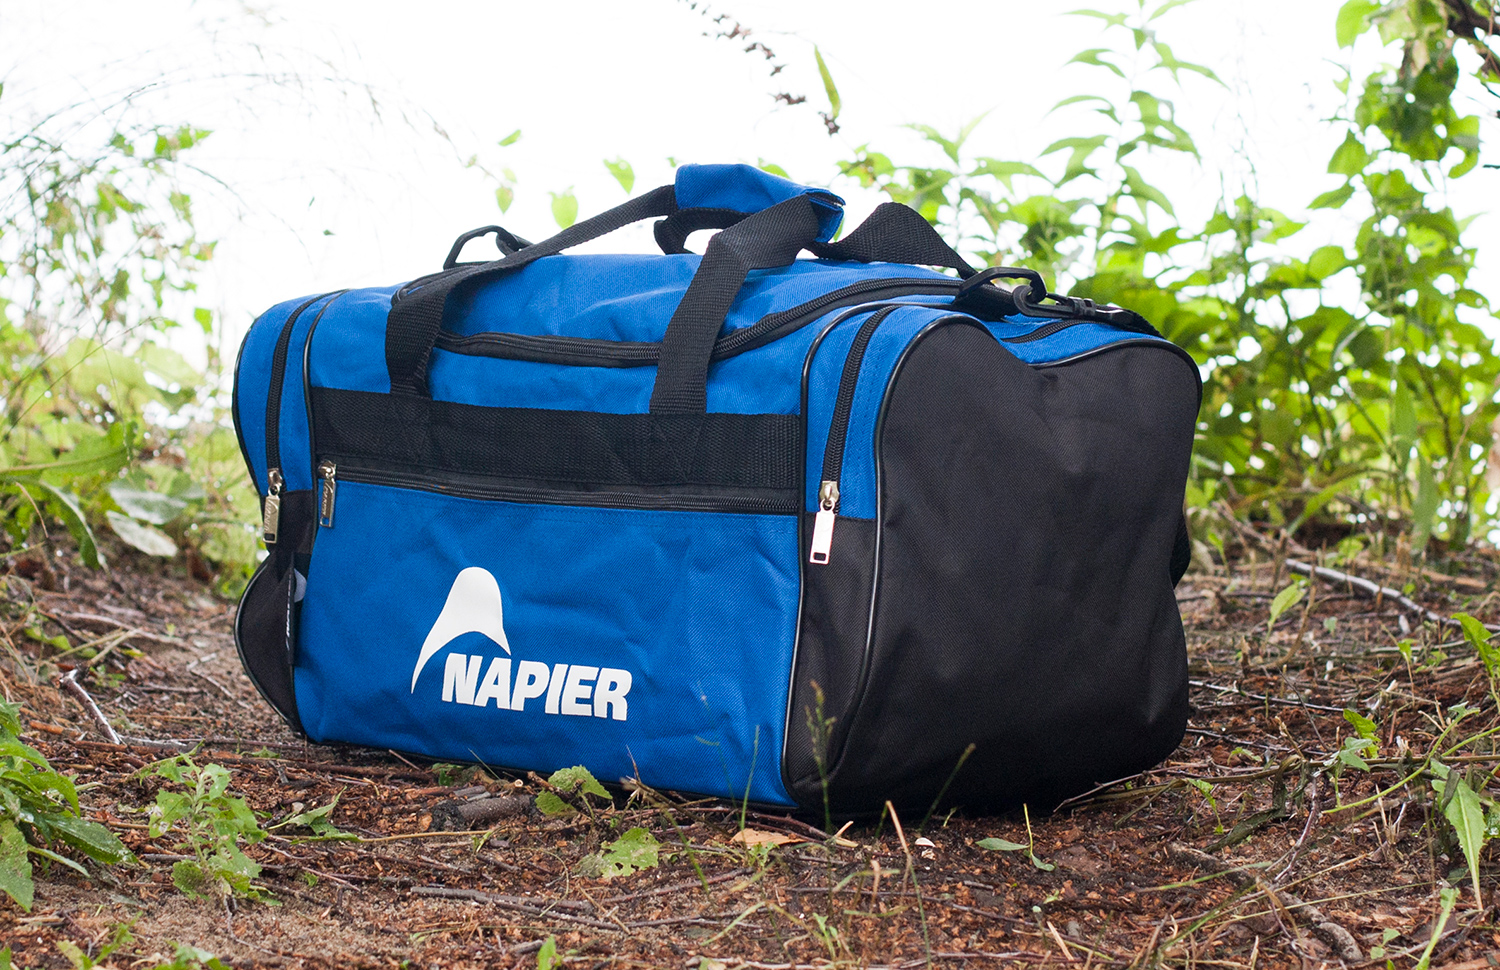 Napier Sportz Traveler Duffel Bag - Read Reviews & FREE SHIPPING!